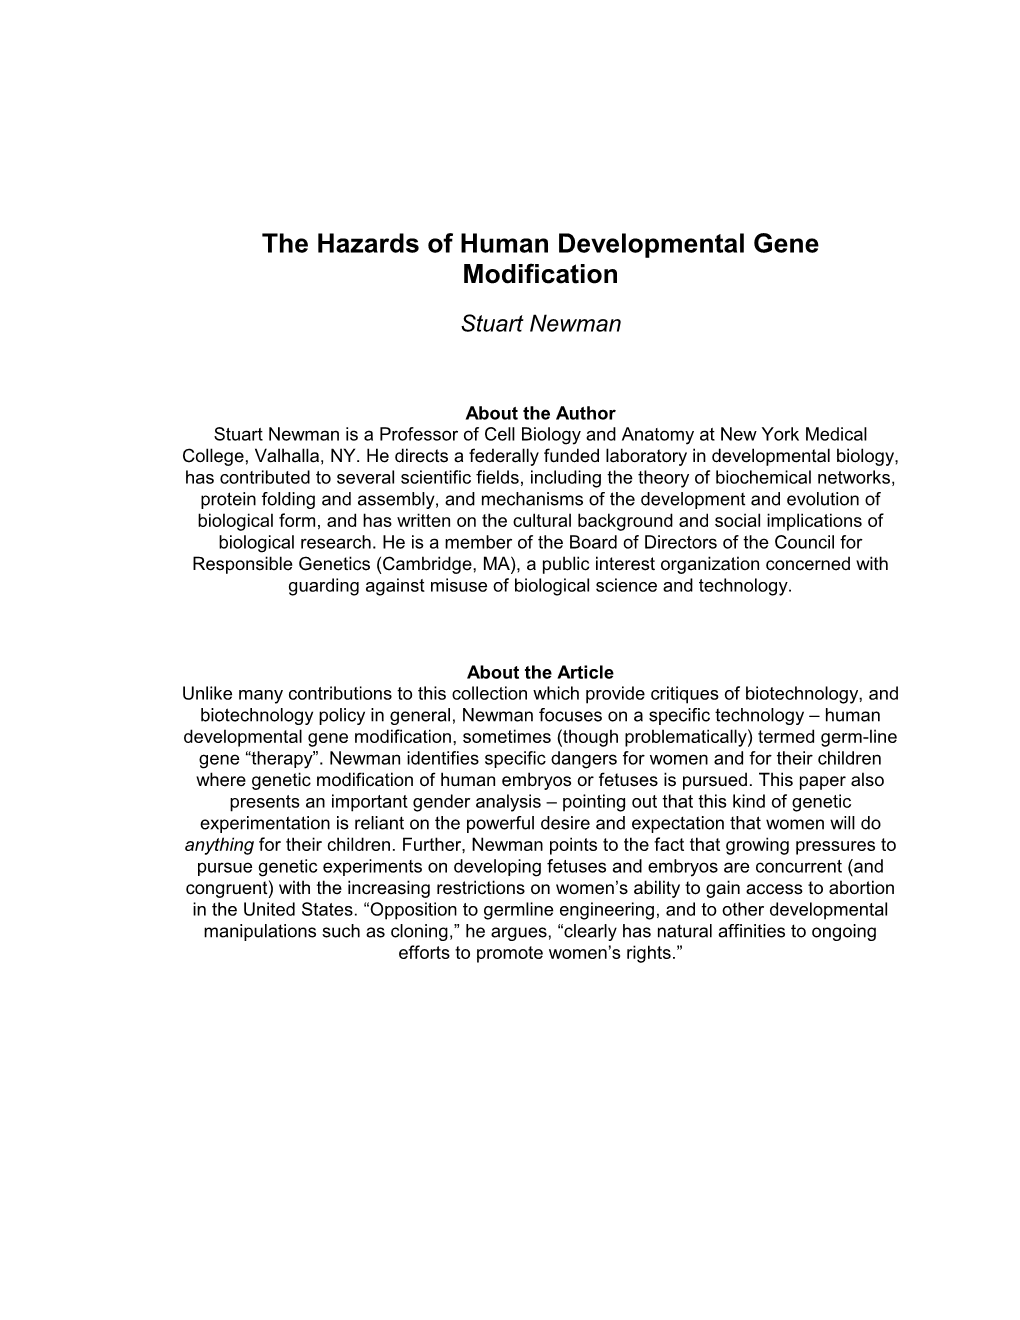 The Hazards of Human Developmental Gene Modification